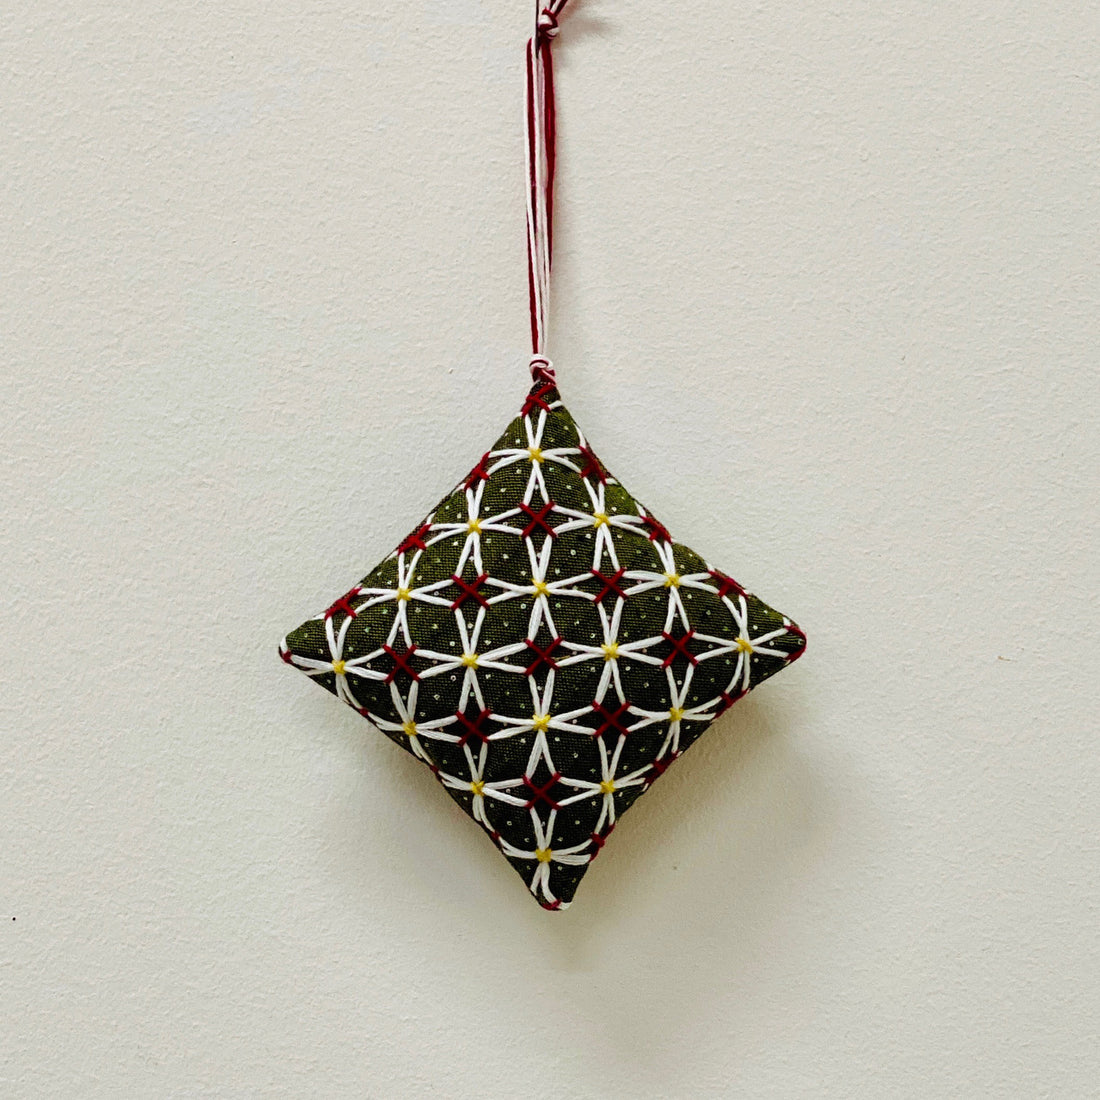 Sashiko Ornament Kit, Set of 5